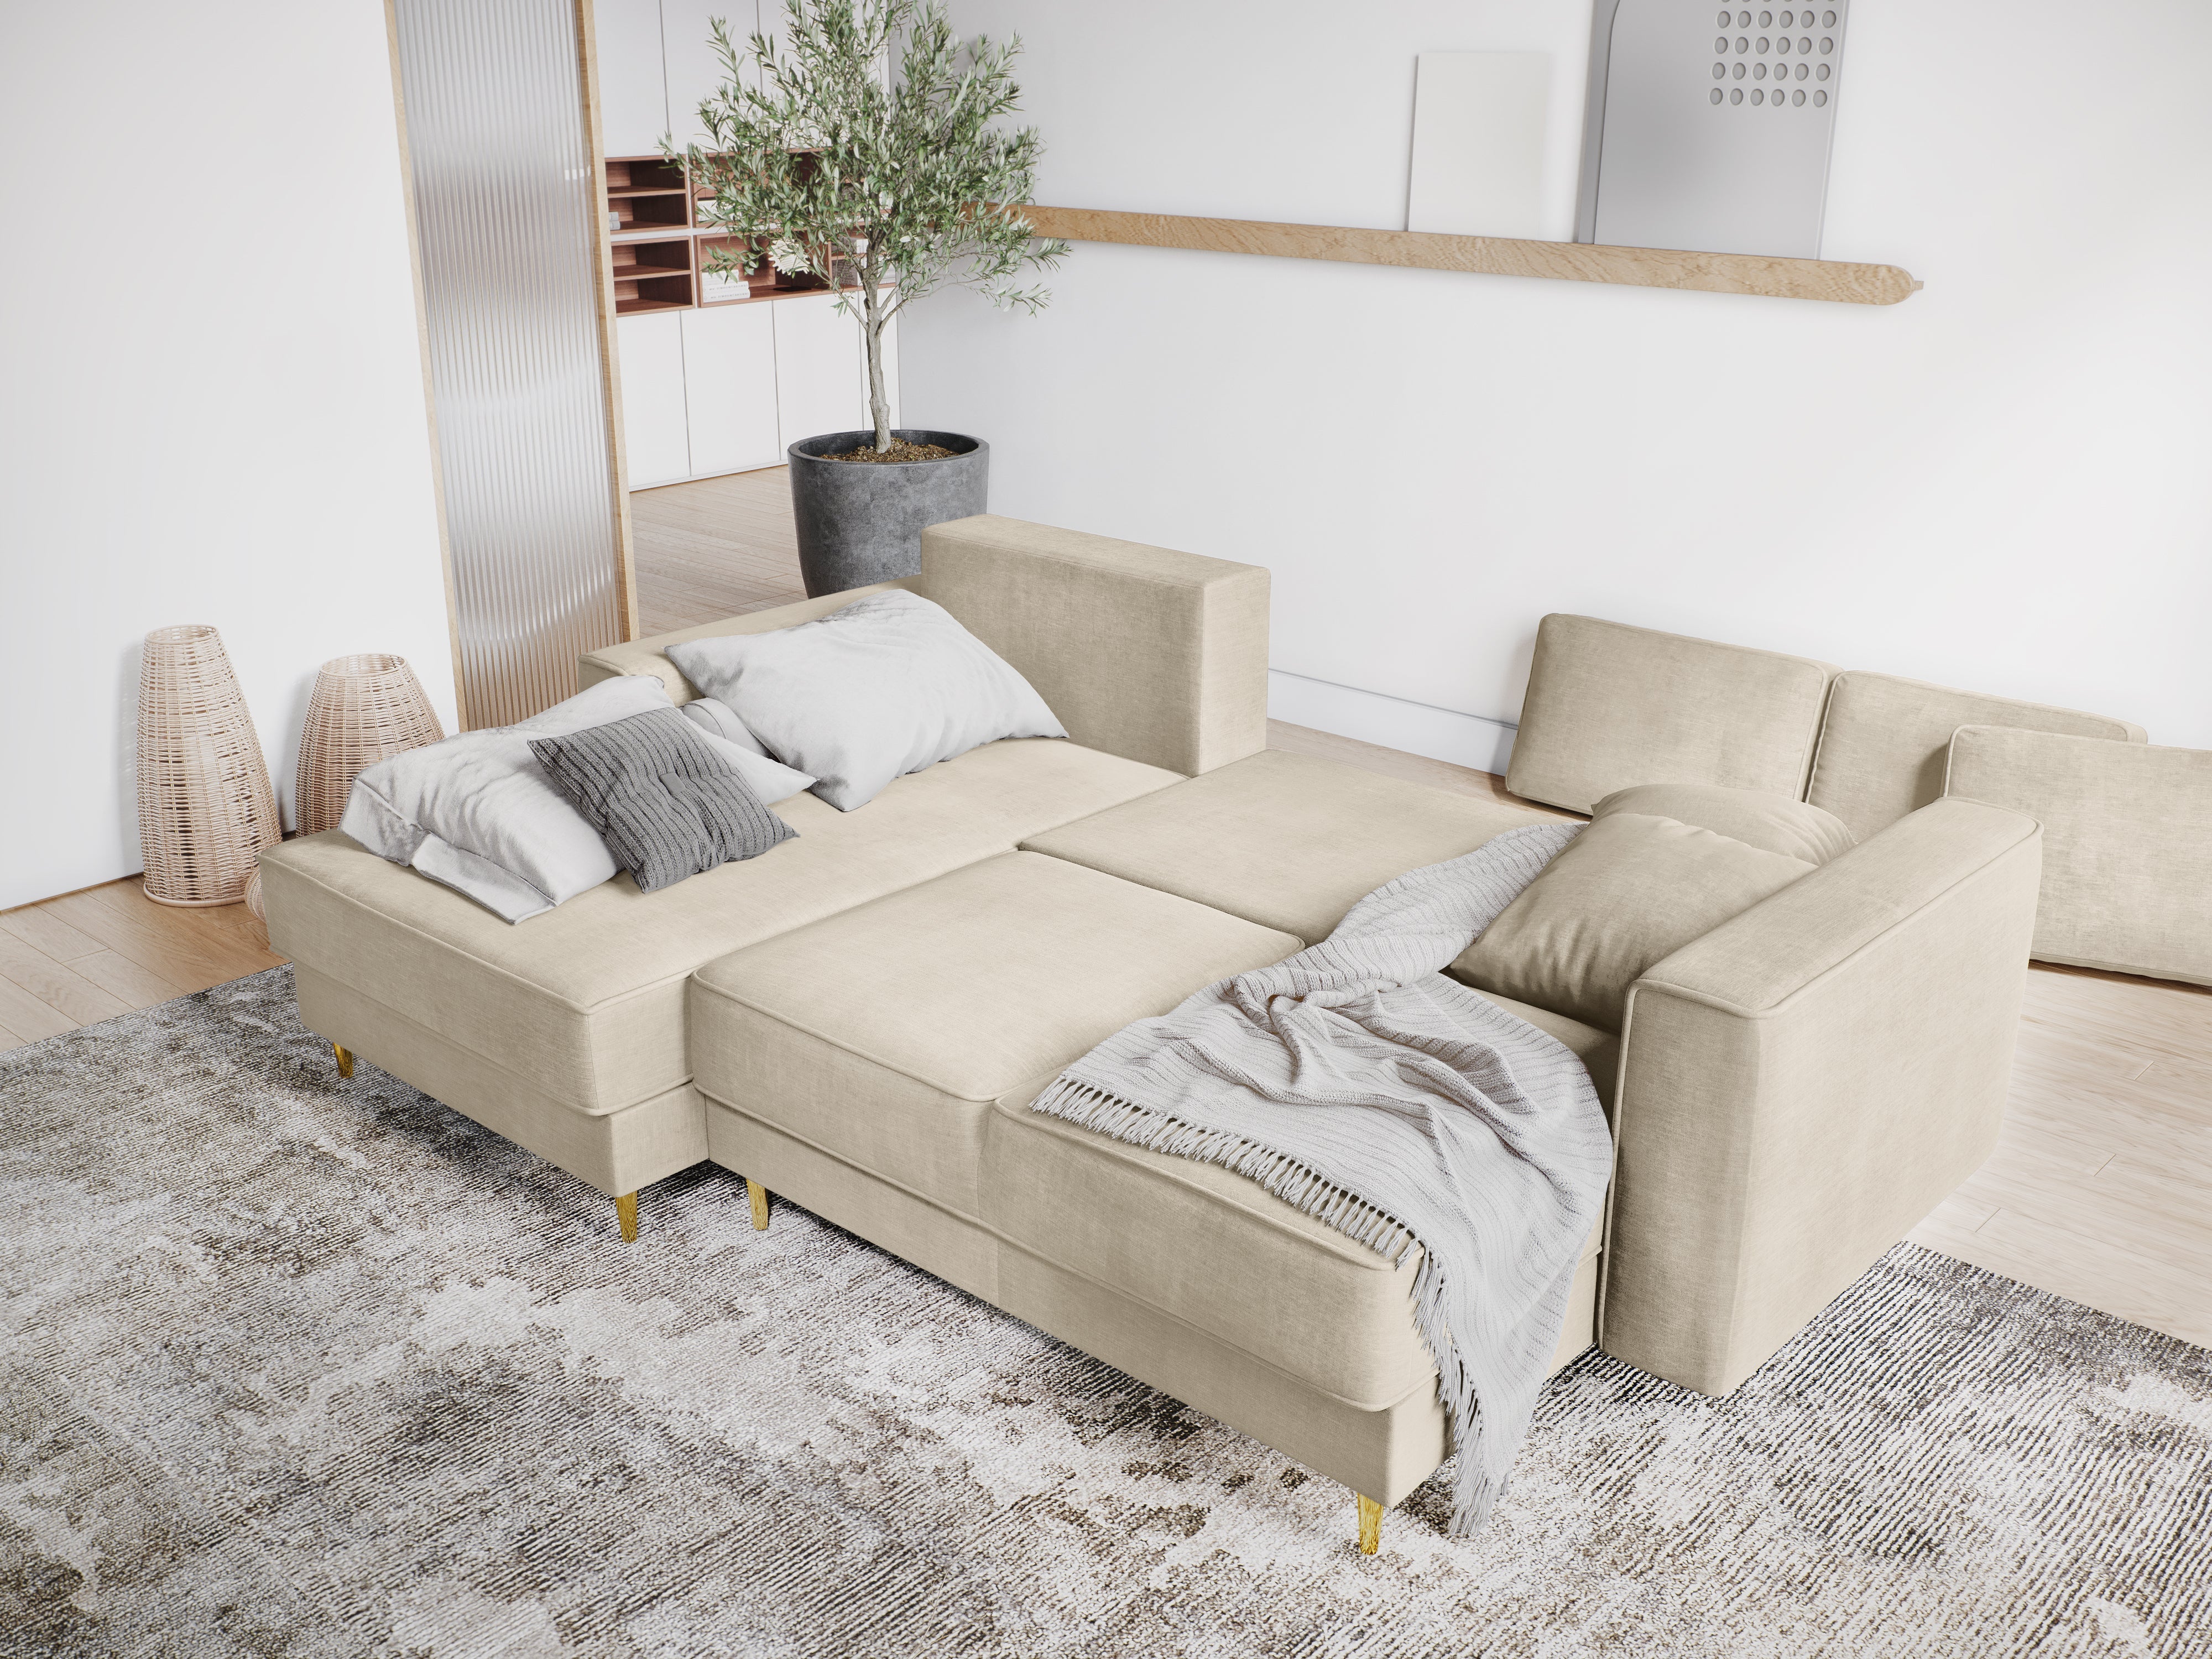 A corner with beige sleeping function